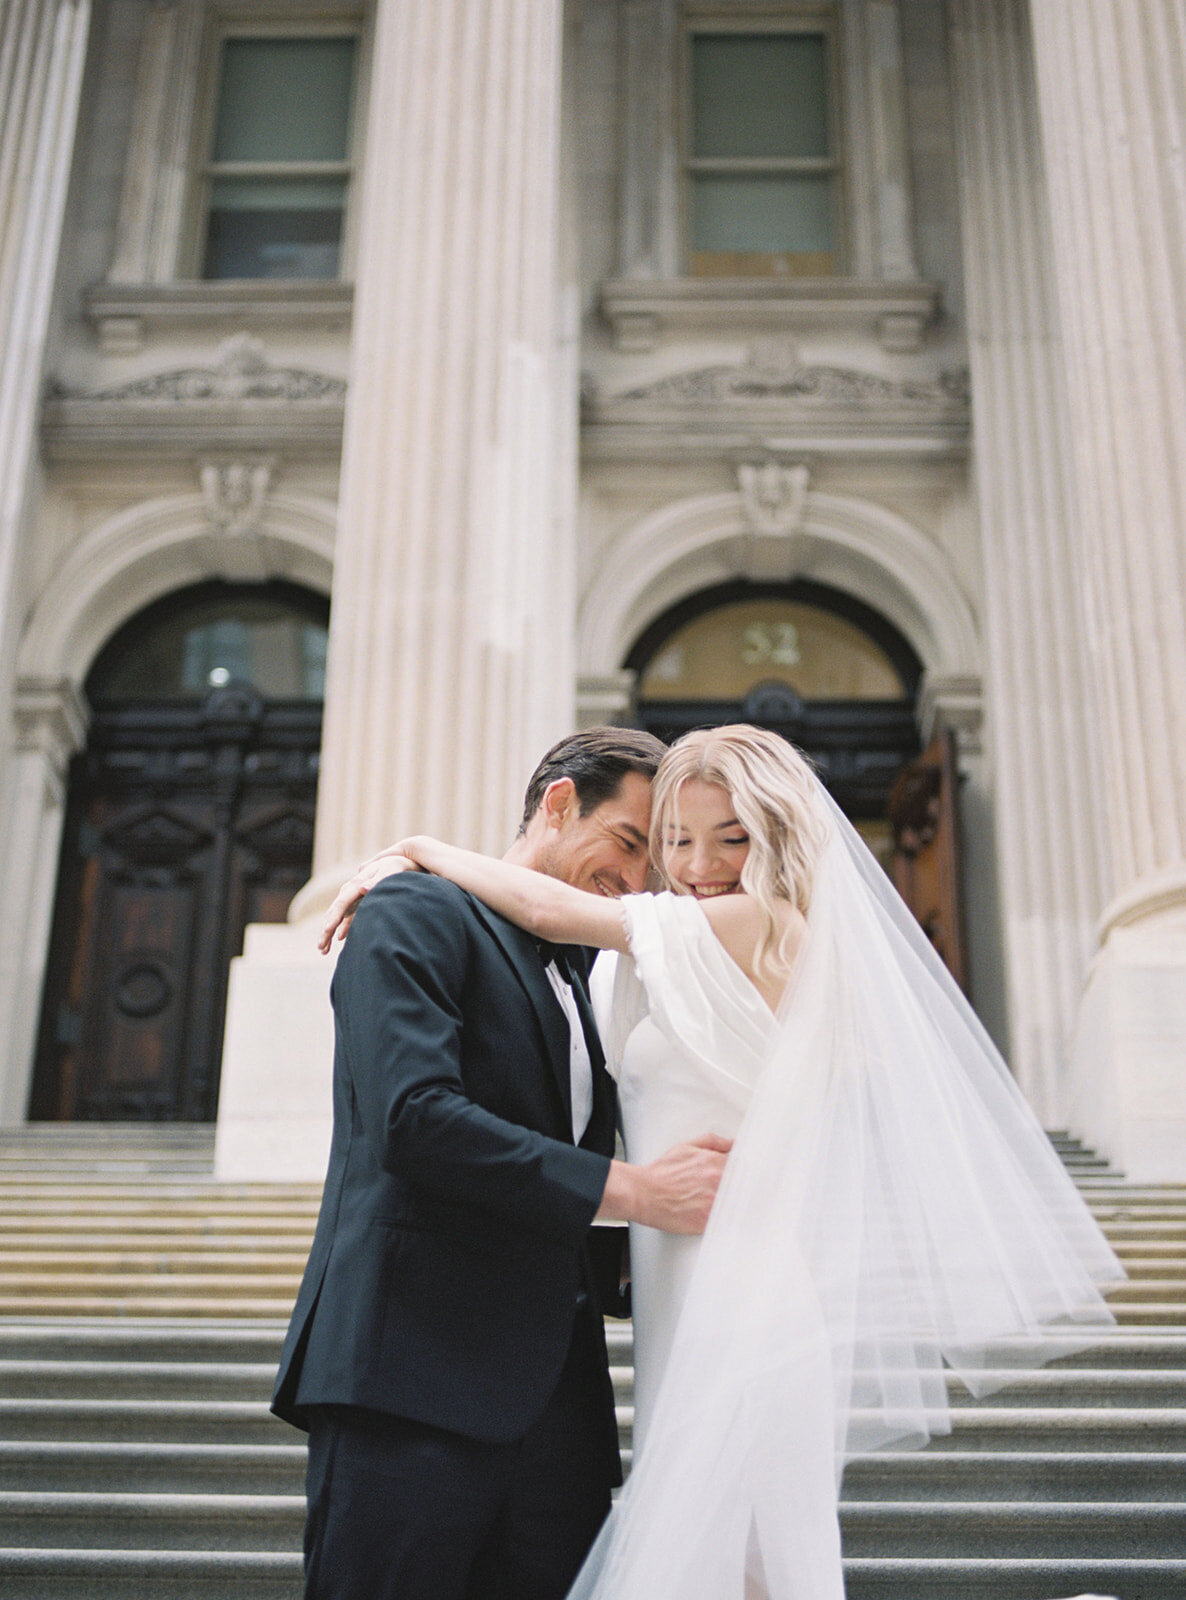 The Plaza Hotel - New York City - Elopement Wedding - Stephanie Michelle Photography - _stephaniemichellephotog - 0-R1-E015